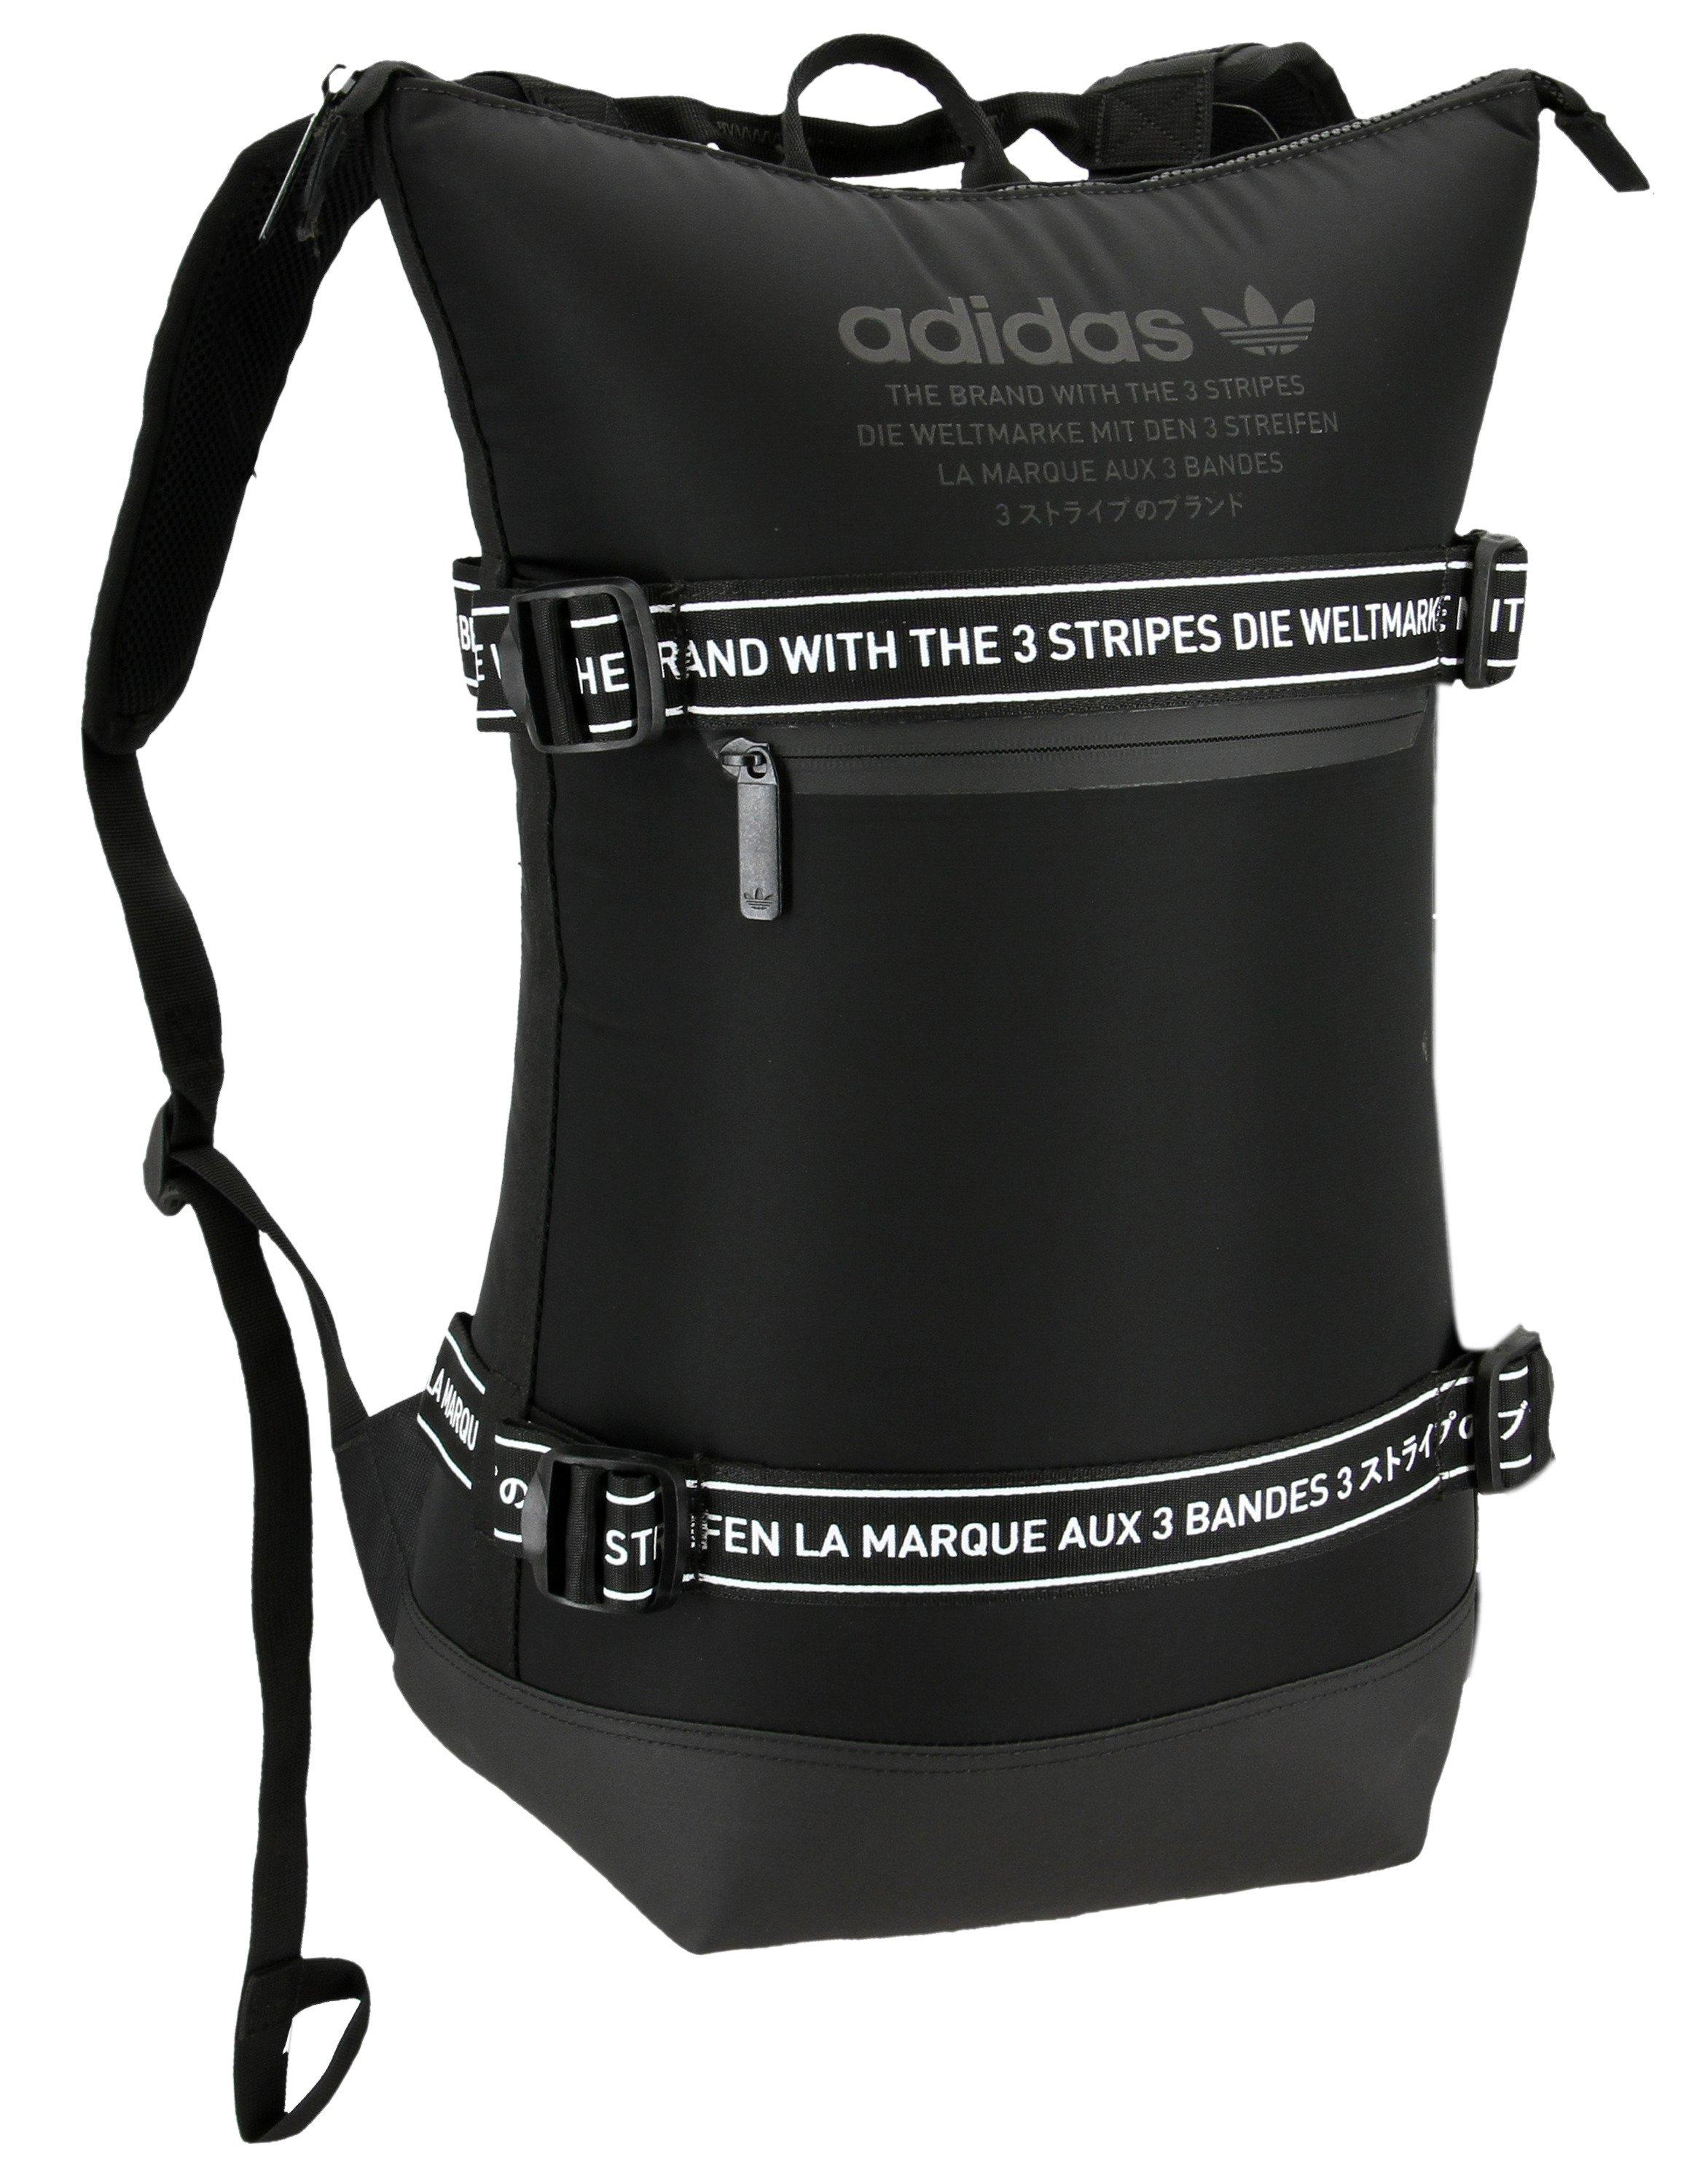 nmd adidas backpack